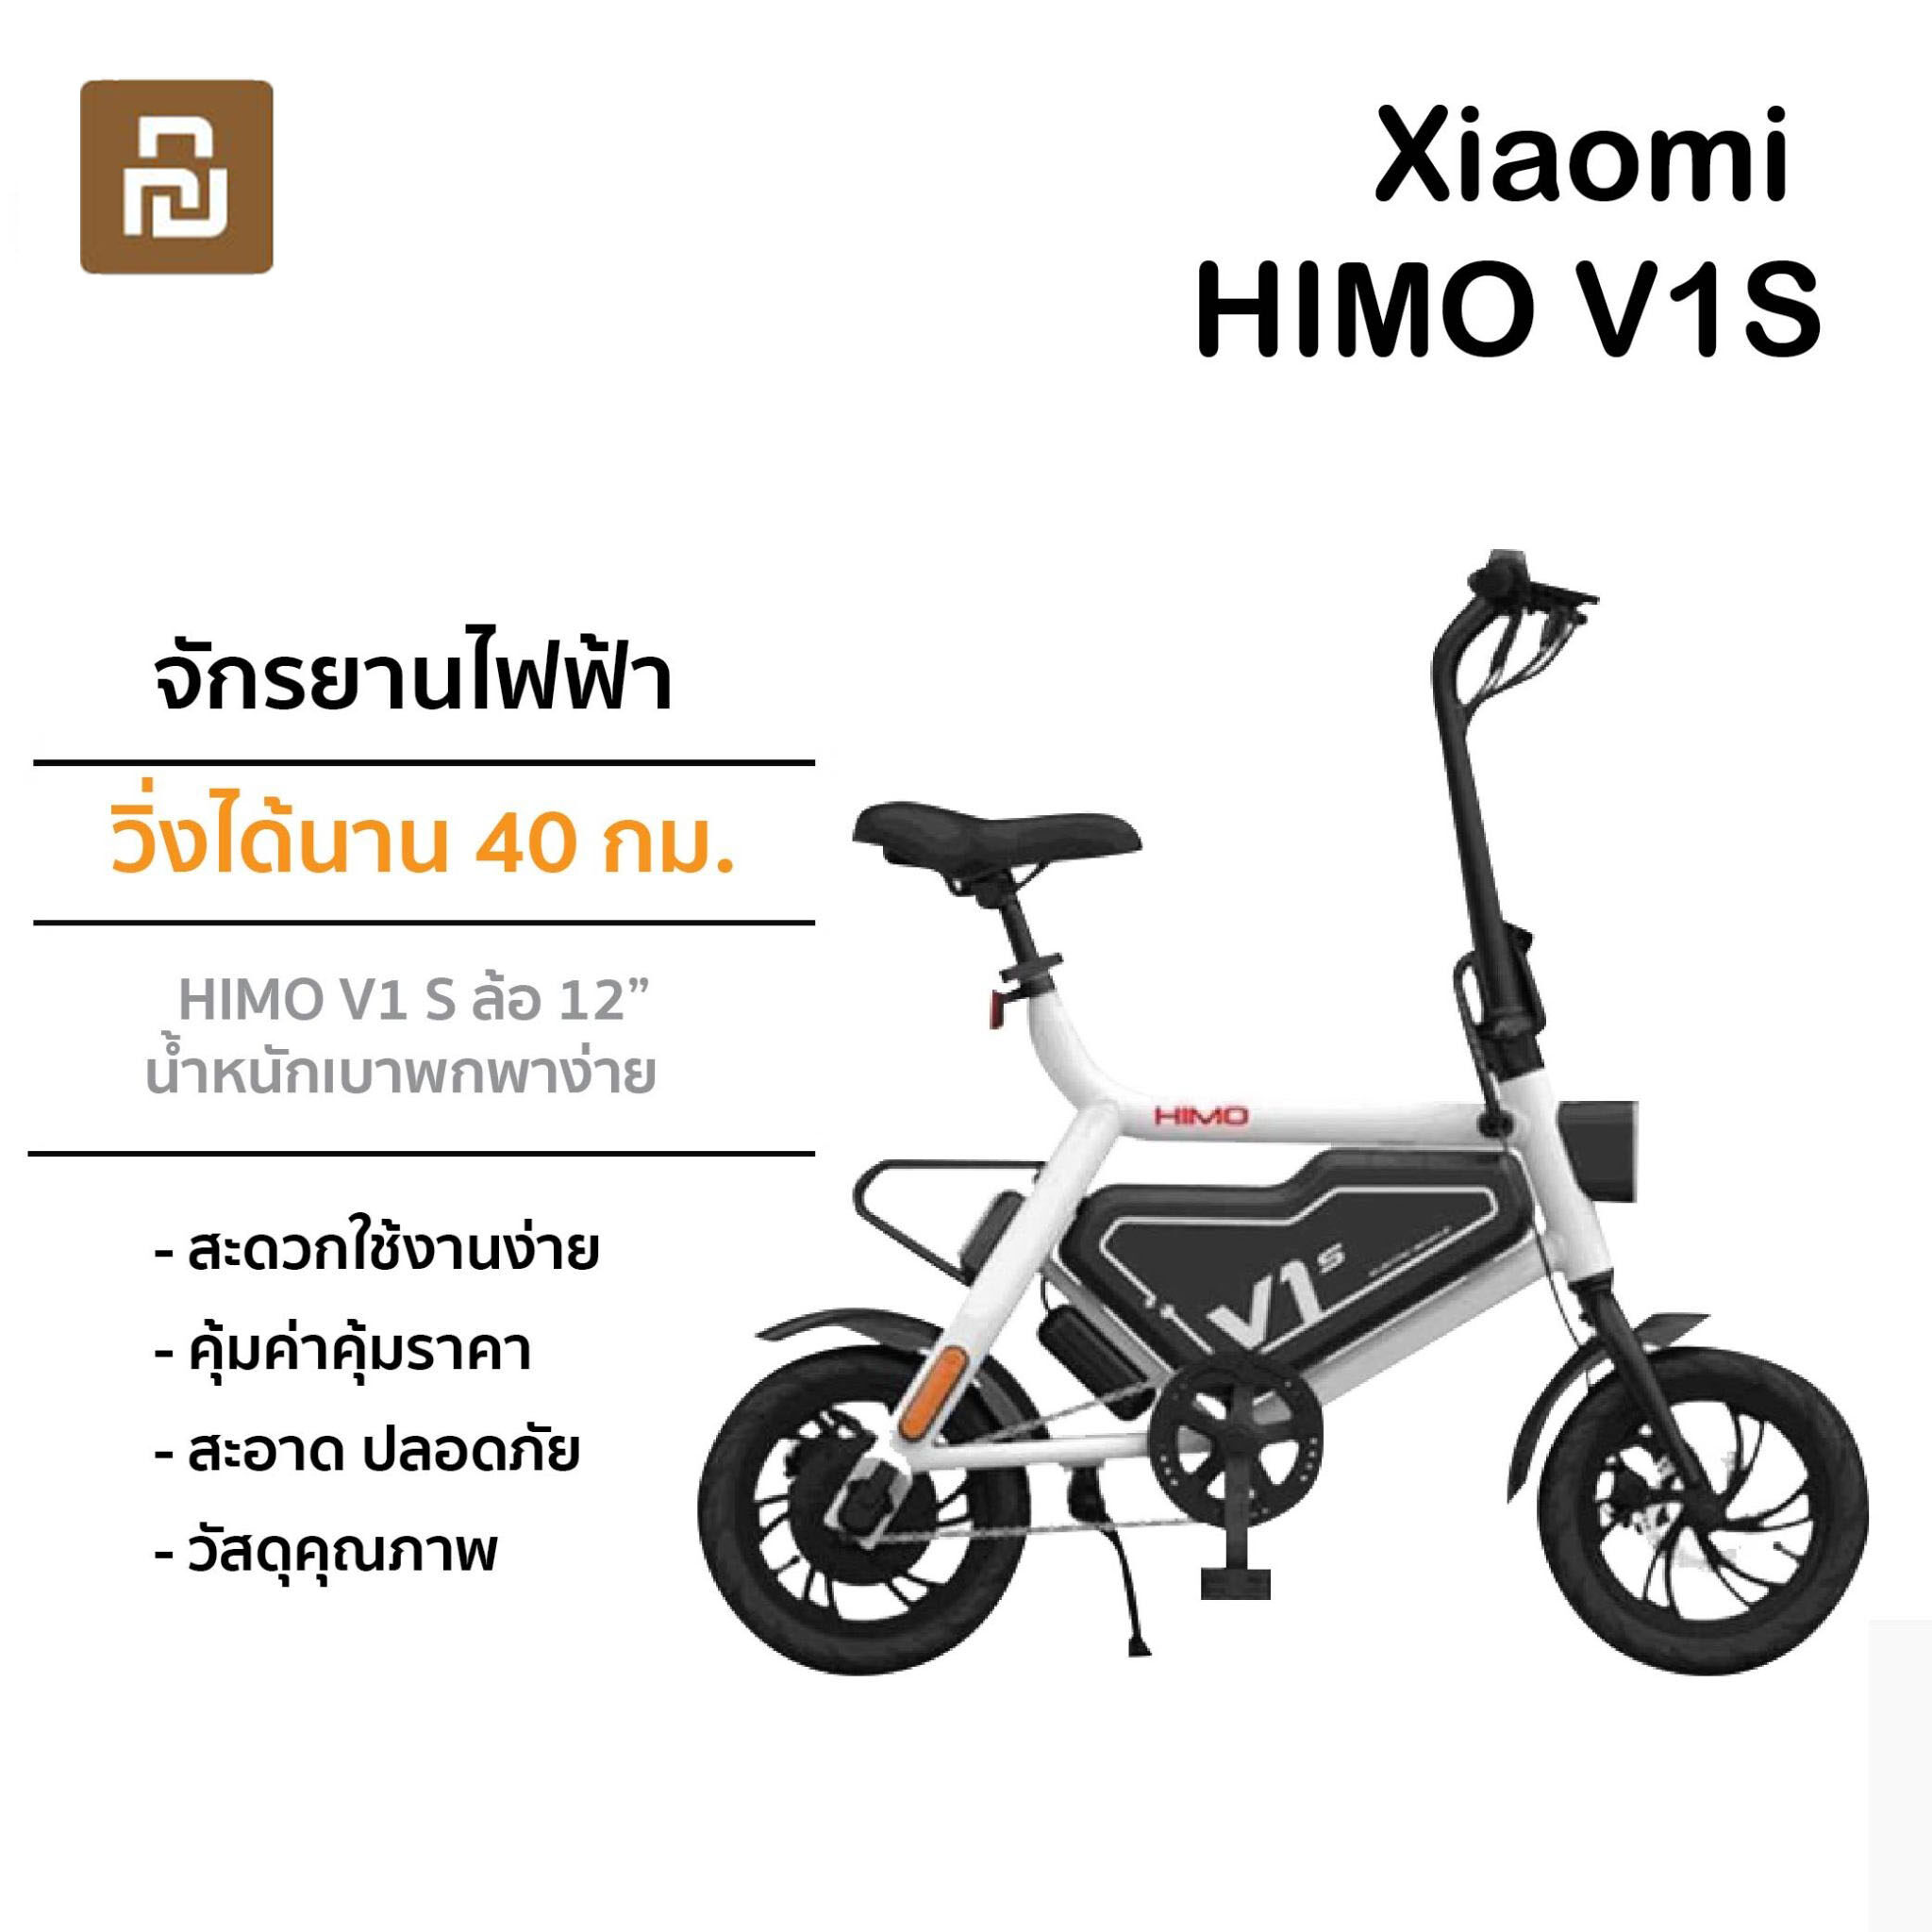 Xiaomi YouPin Official Store HIMO V1S 250W 7.8Ah จักรยานยนต์ไฟฟ้าพับได้ ใช้งานได้มากกว่า 40 km จักรยานยนต์ไฟฟ้าไมล์